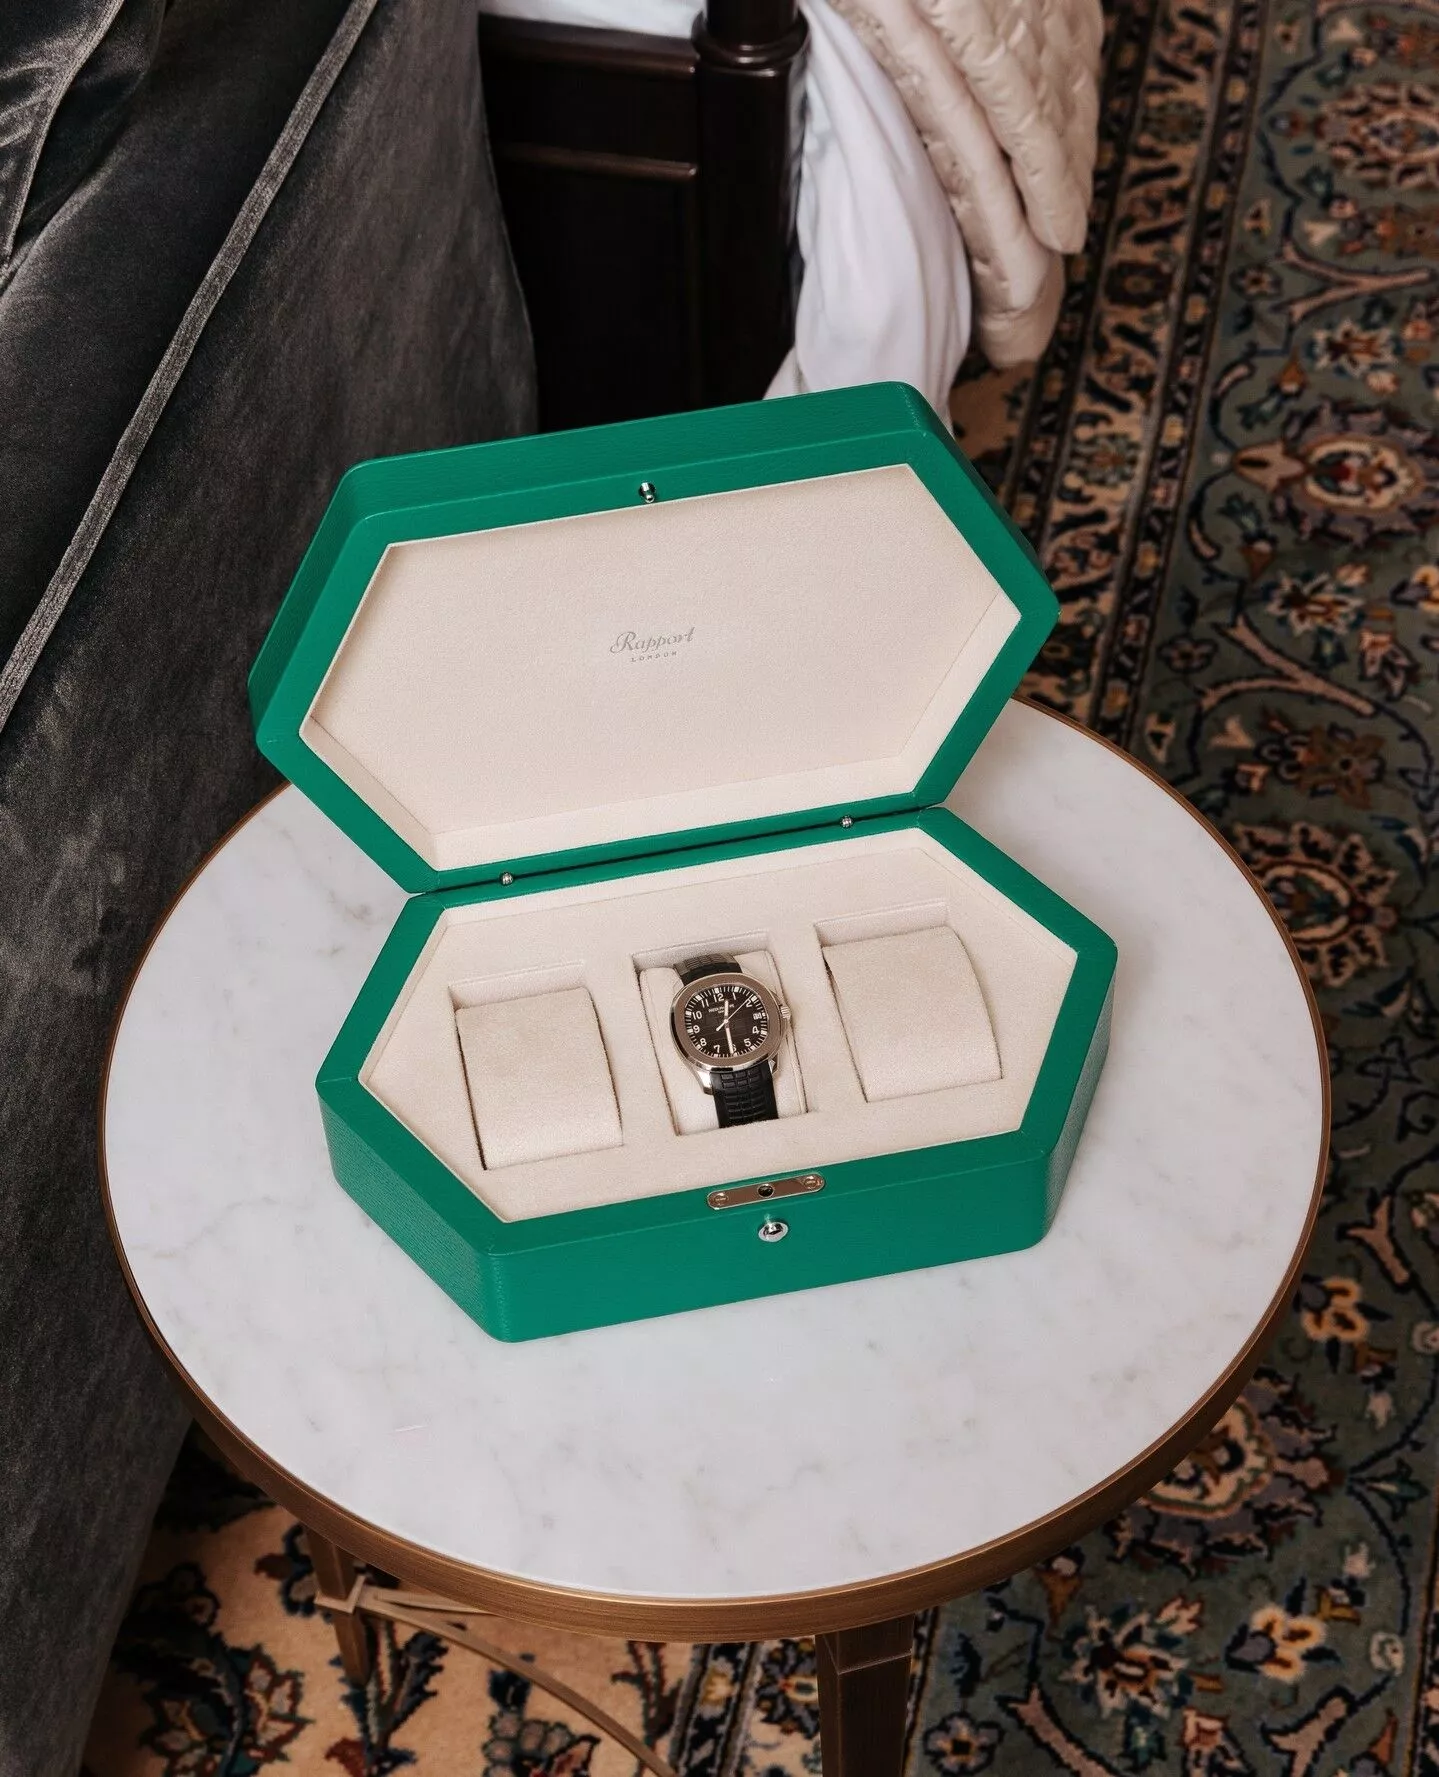 luxury leather watch box